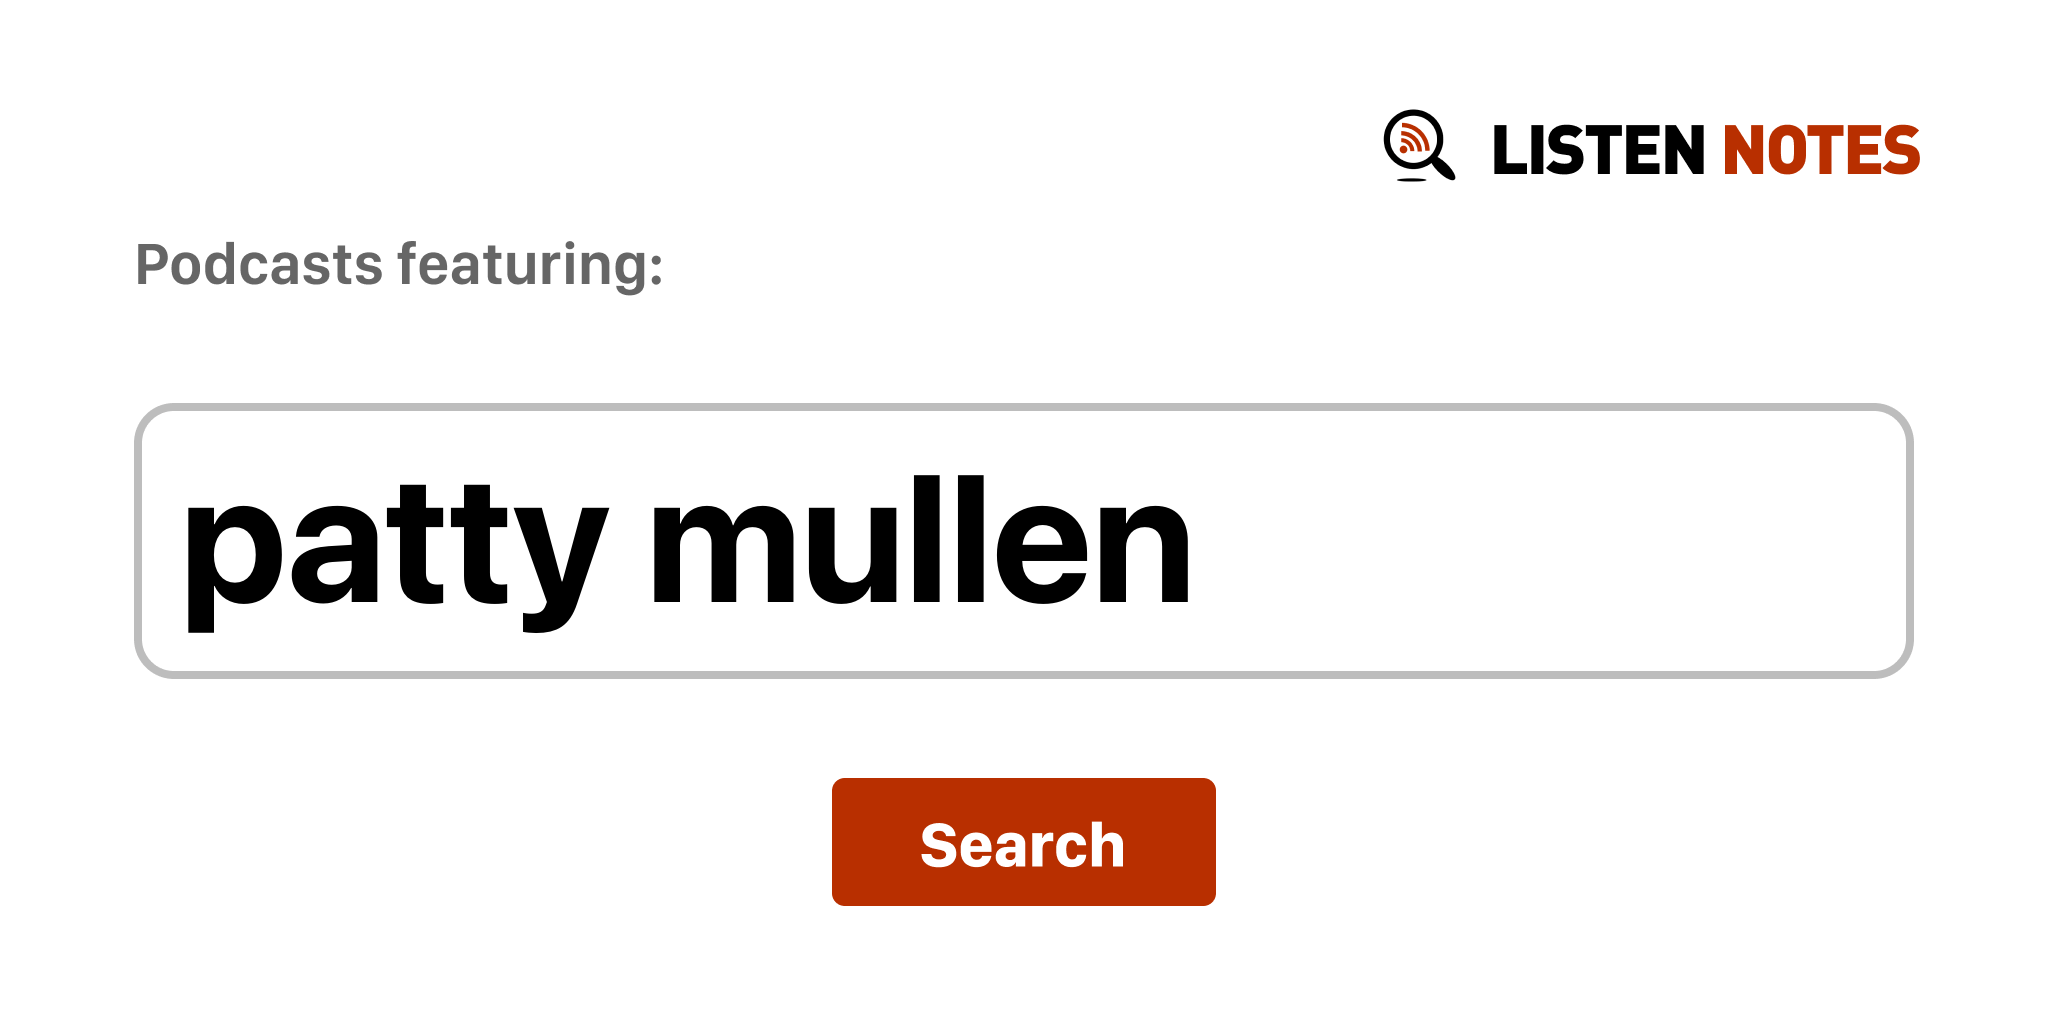 Mullen actress patty Category:Patty Mullen